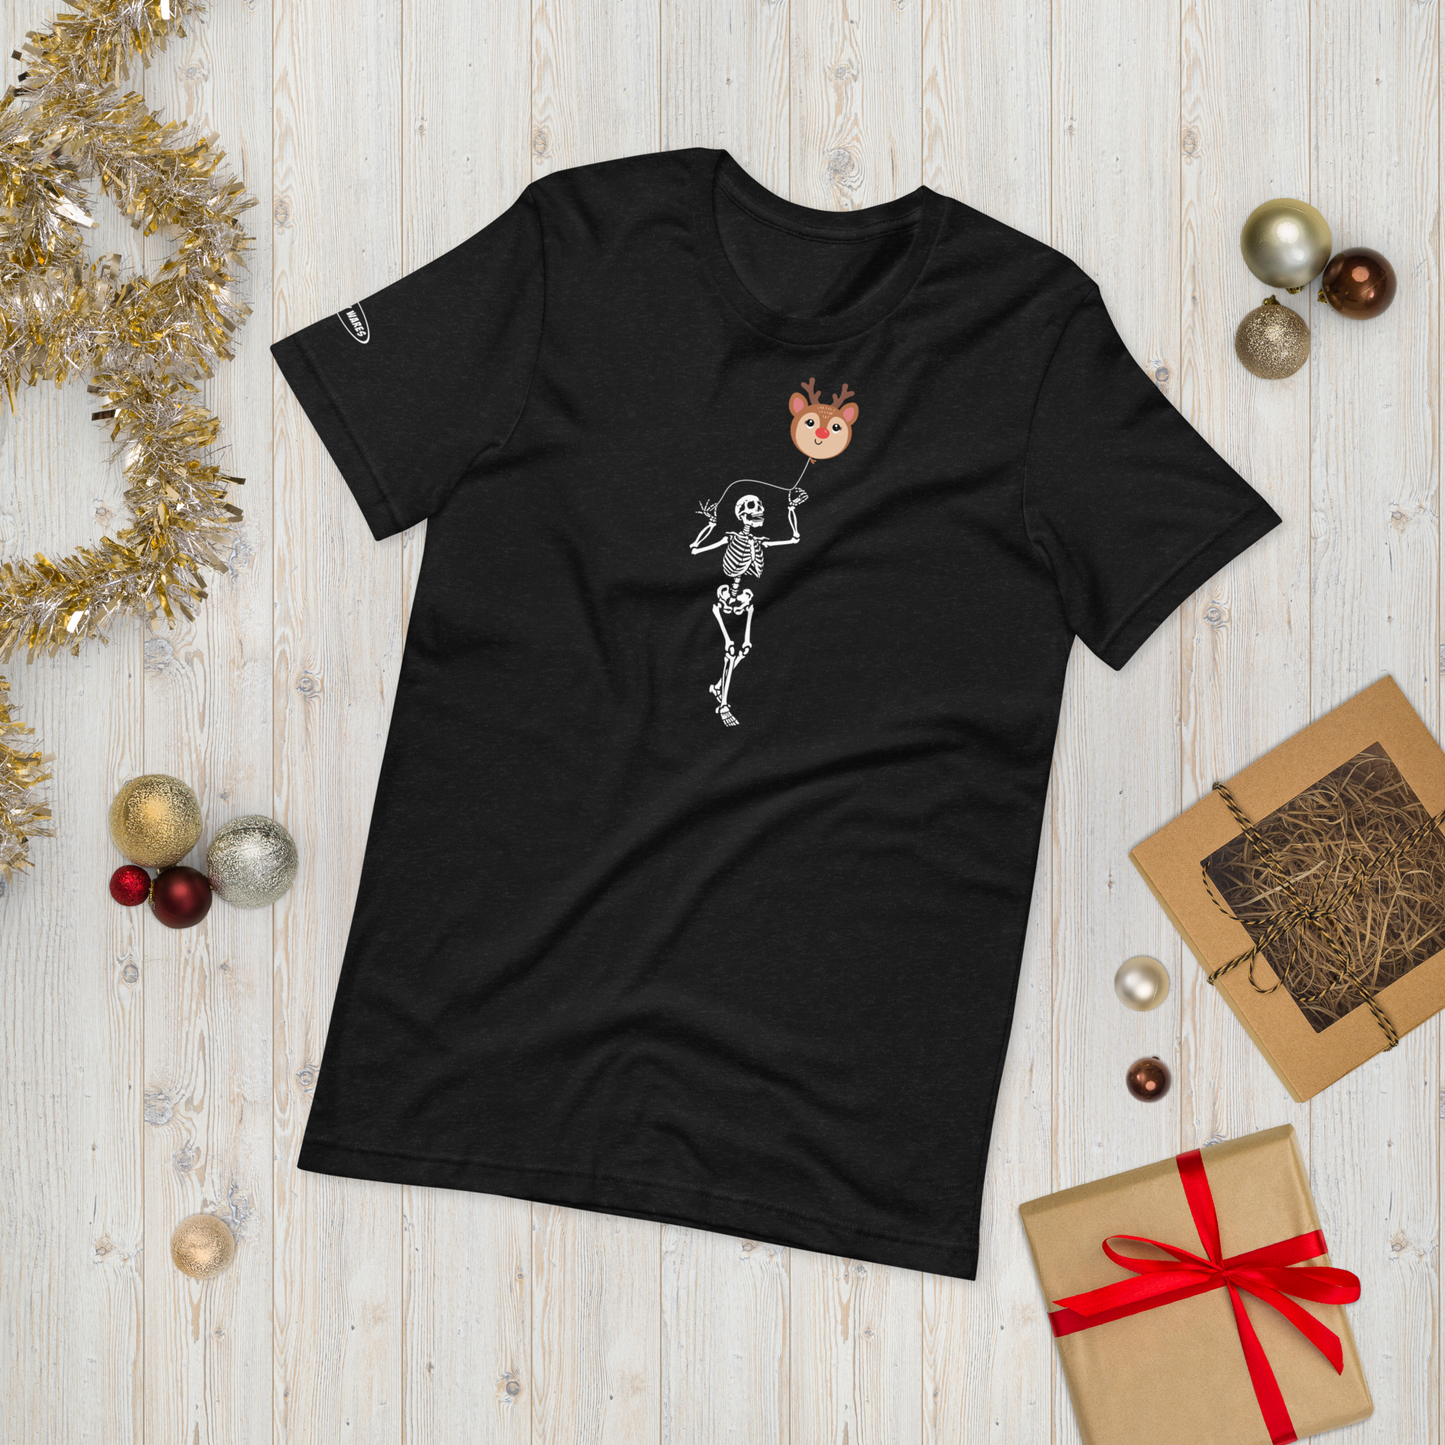 Unisex - CHRISTMAS - Skeleton Reindeer Balloon - Funny t-shirt